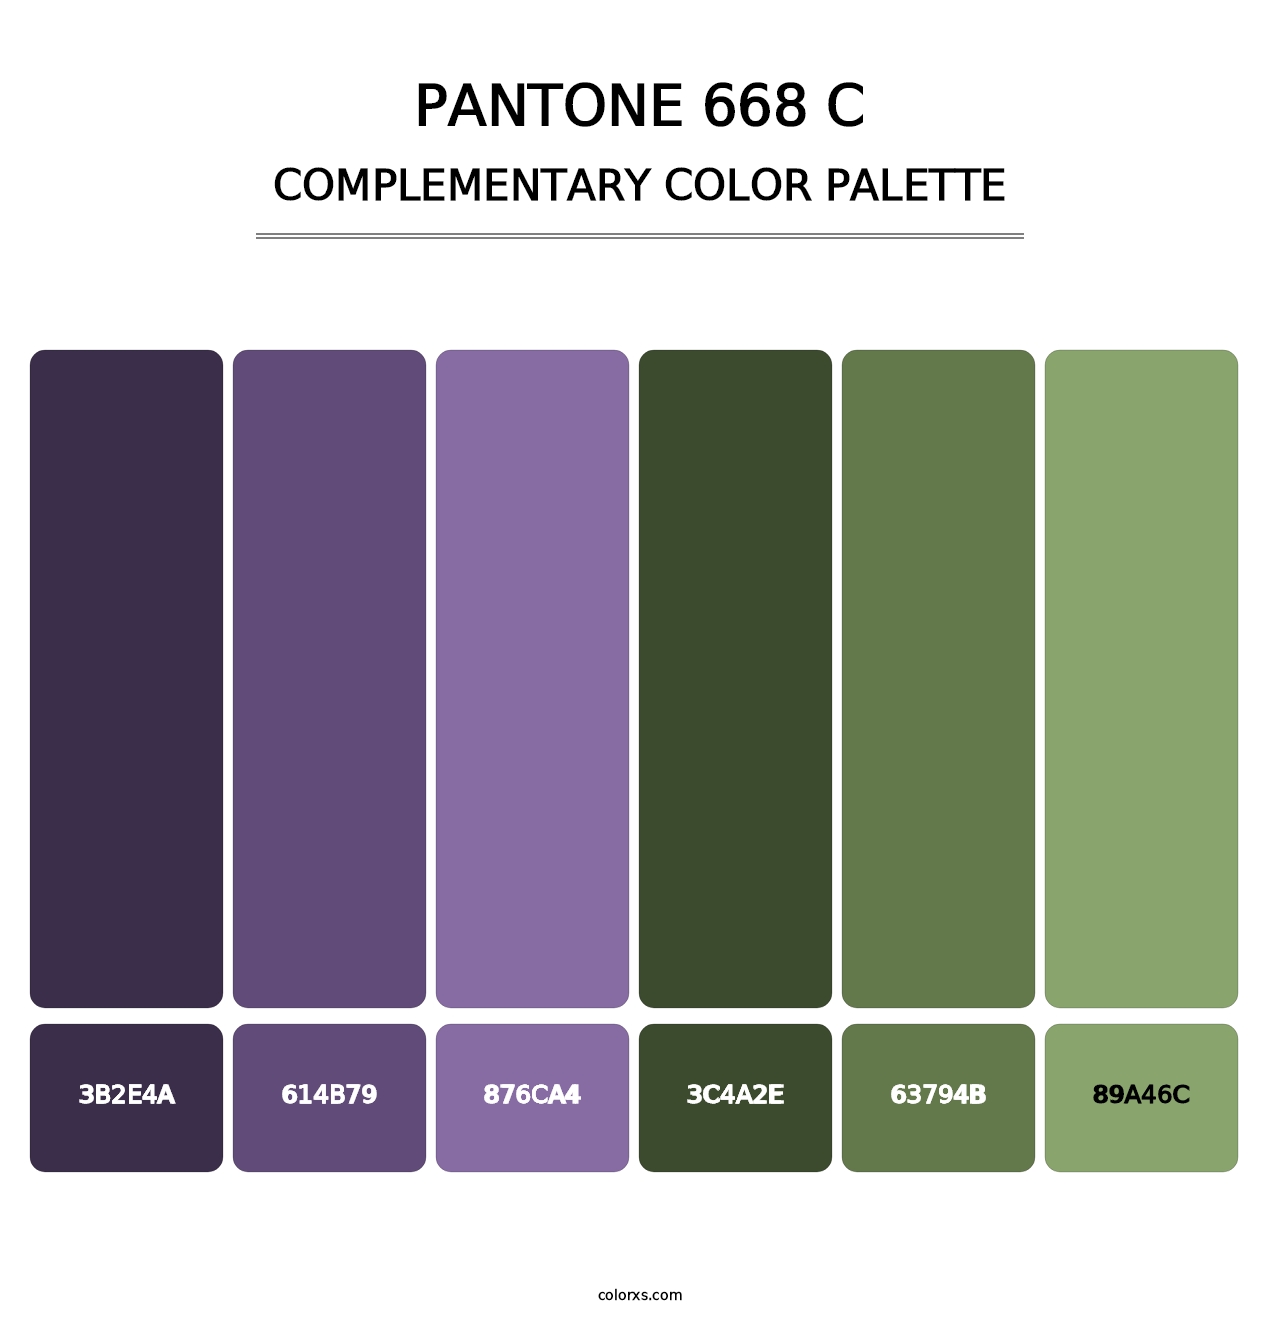 PANTONE 668 C - Complementary Color Palette